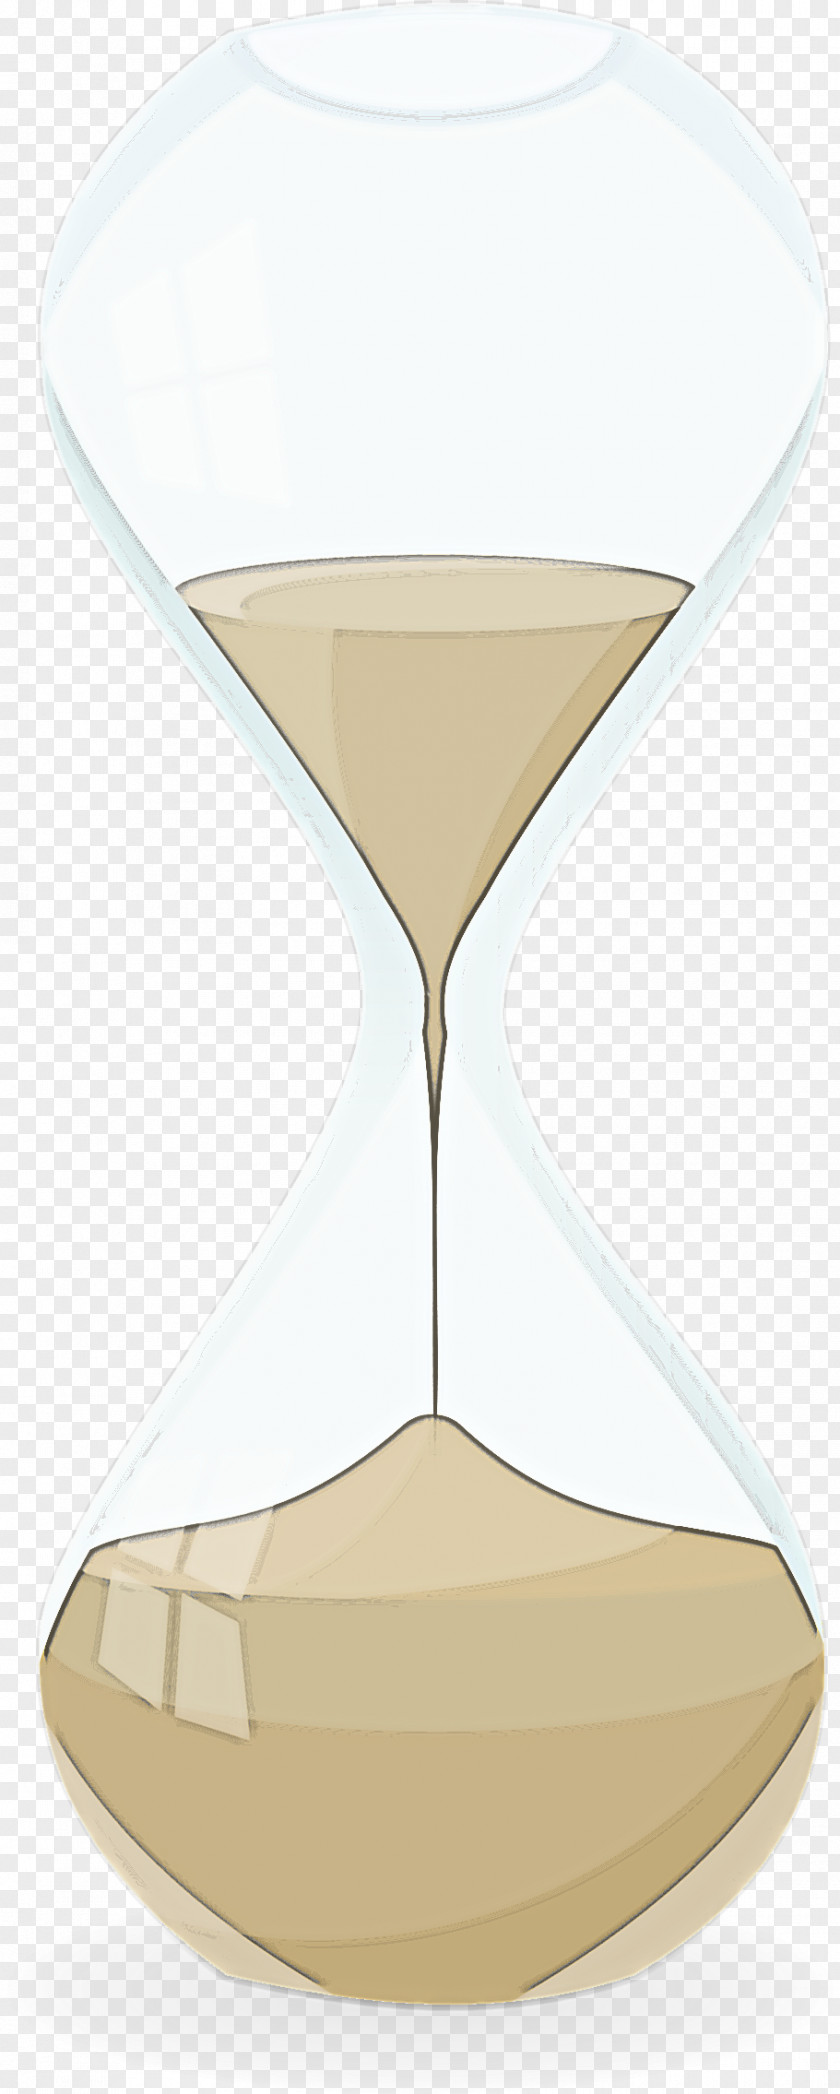 Martini Glass Hourglass Drink Drinkware Stemware PNG